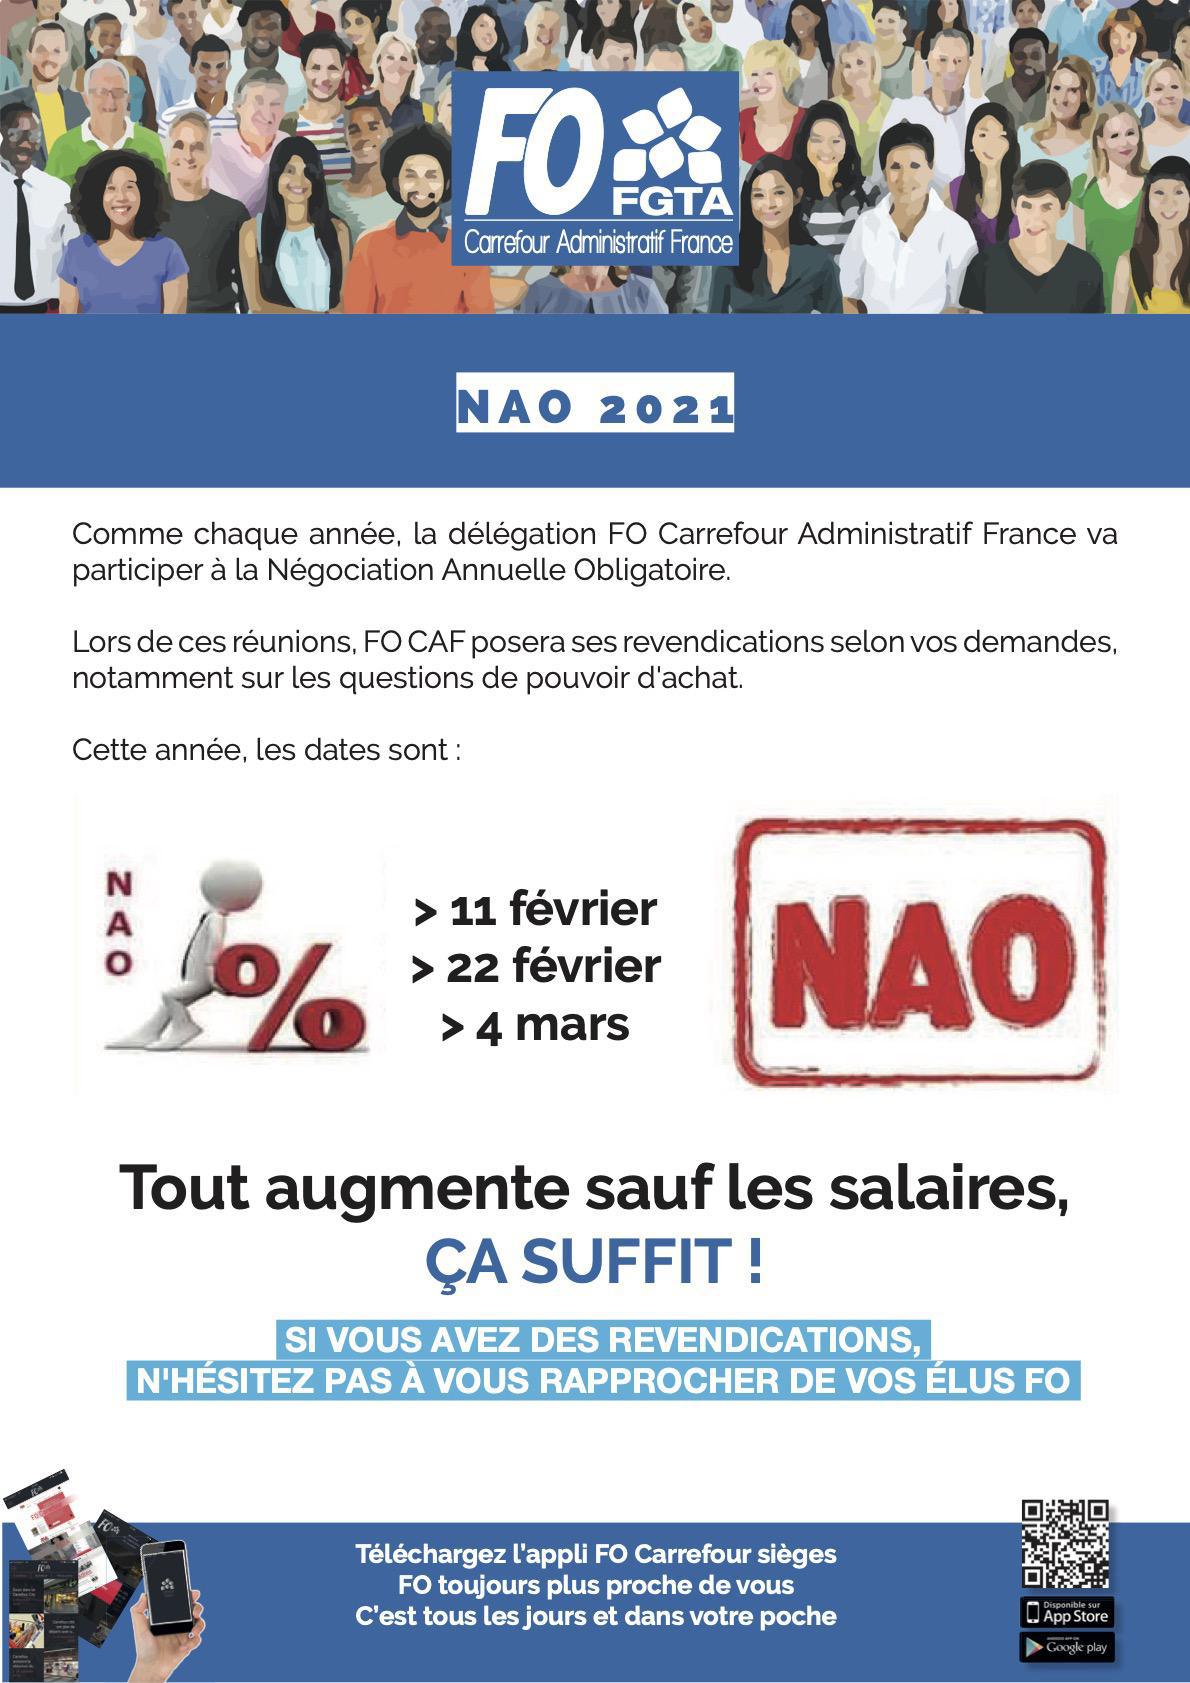 Carrefour Administratif France: NAO 2021